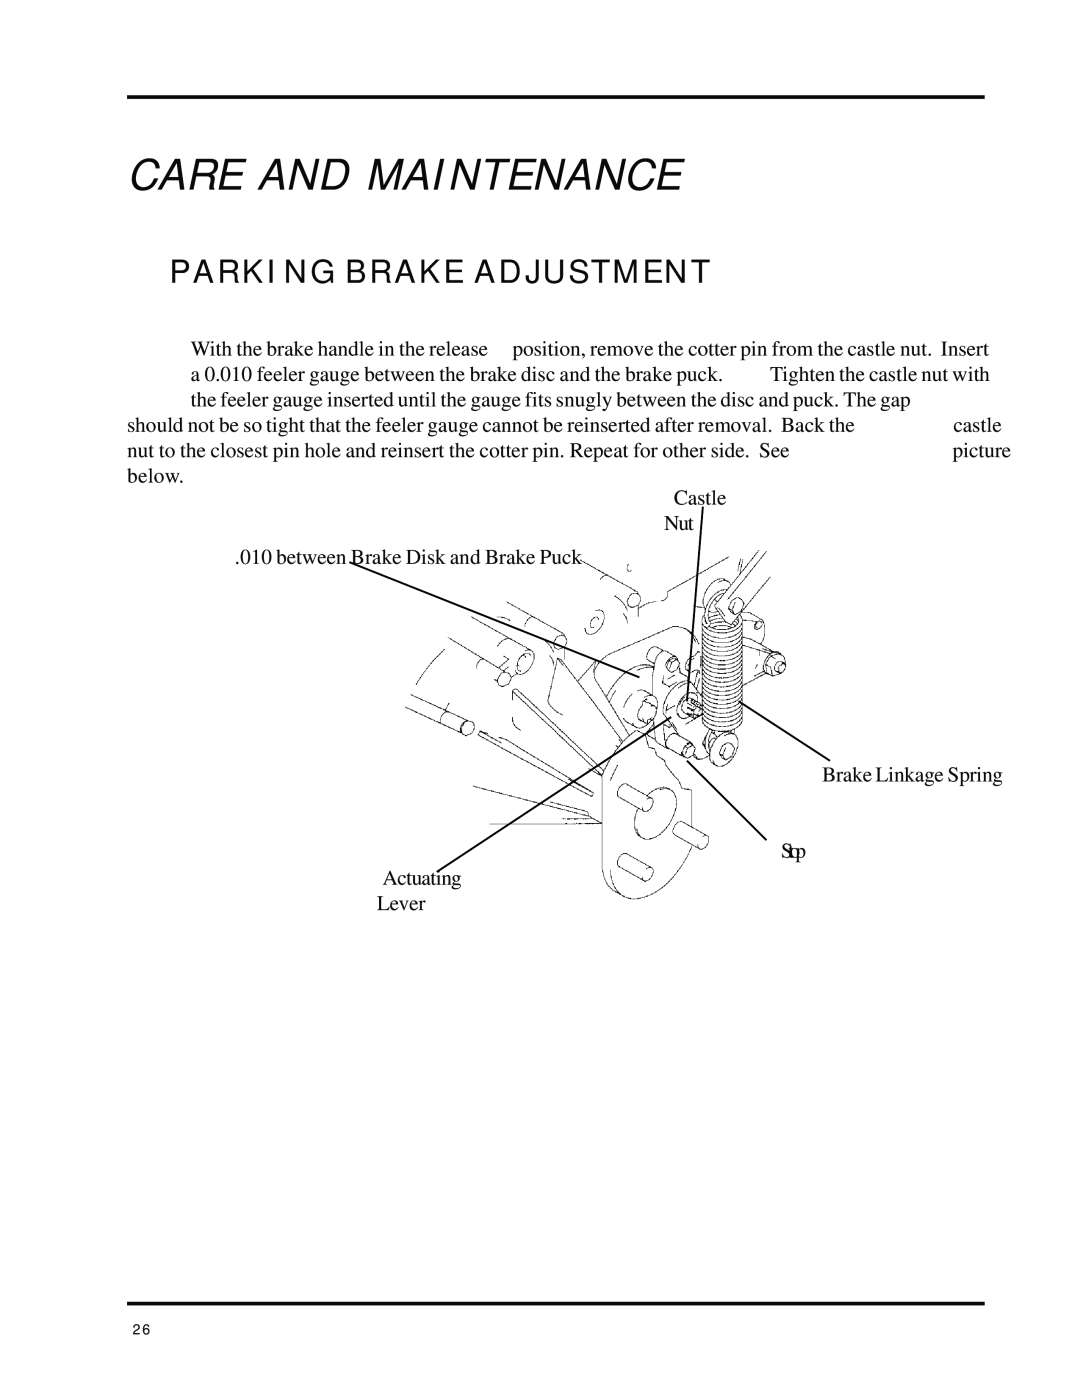 Dixon ZTR 8025 manual Parking Brake Adjustment, Care And Maintenance 